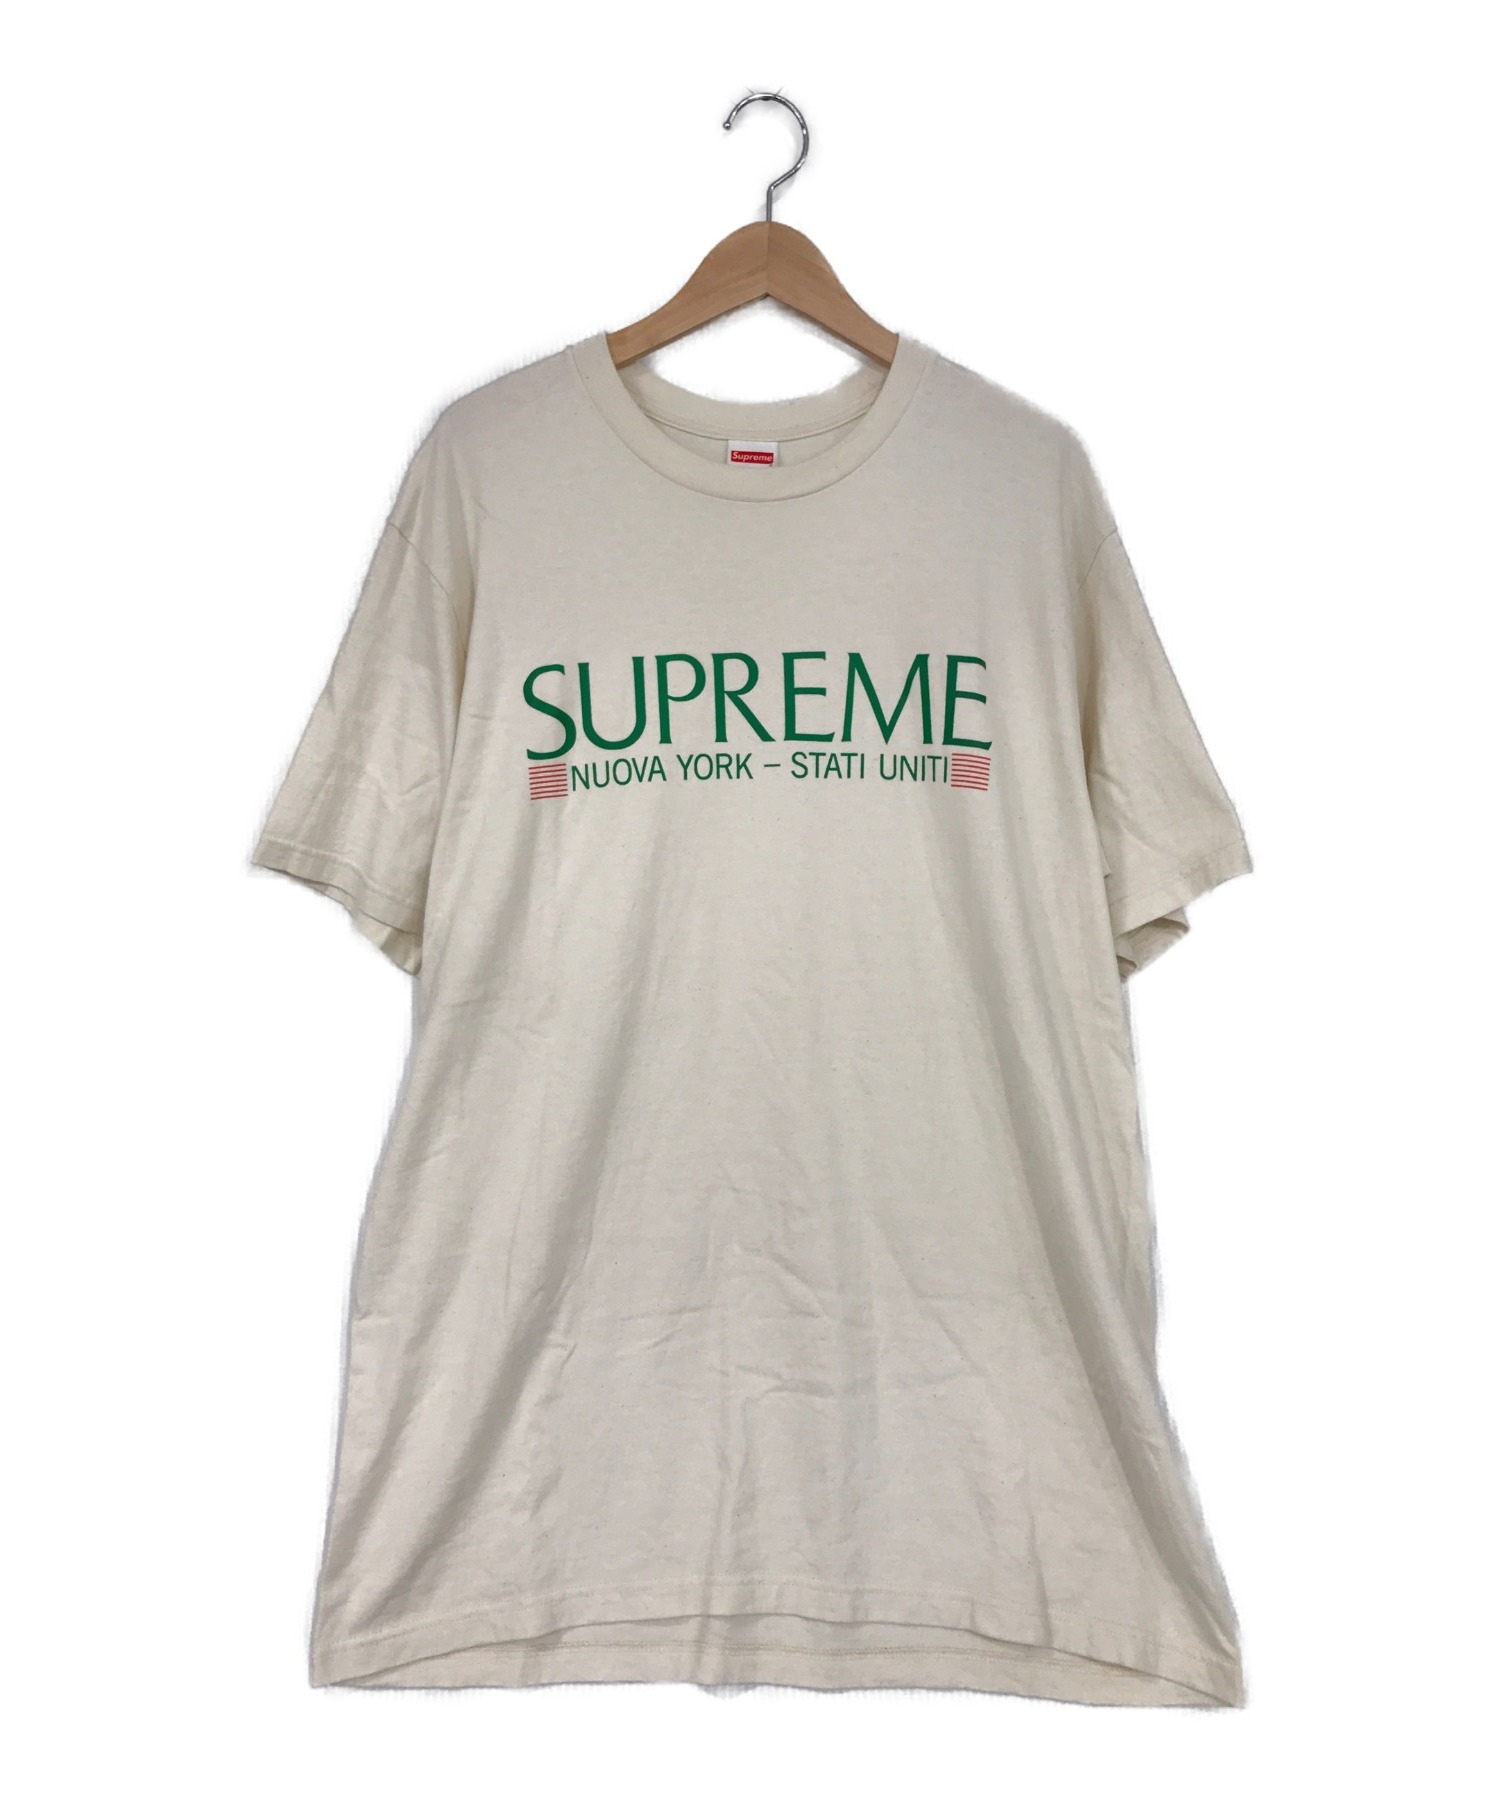 【M】supreme  Nuova York Tee Tシャツ